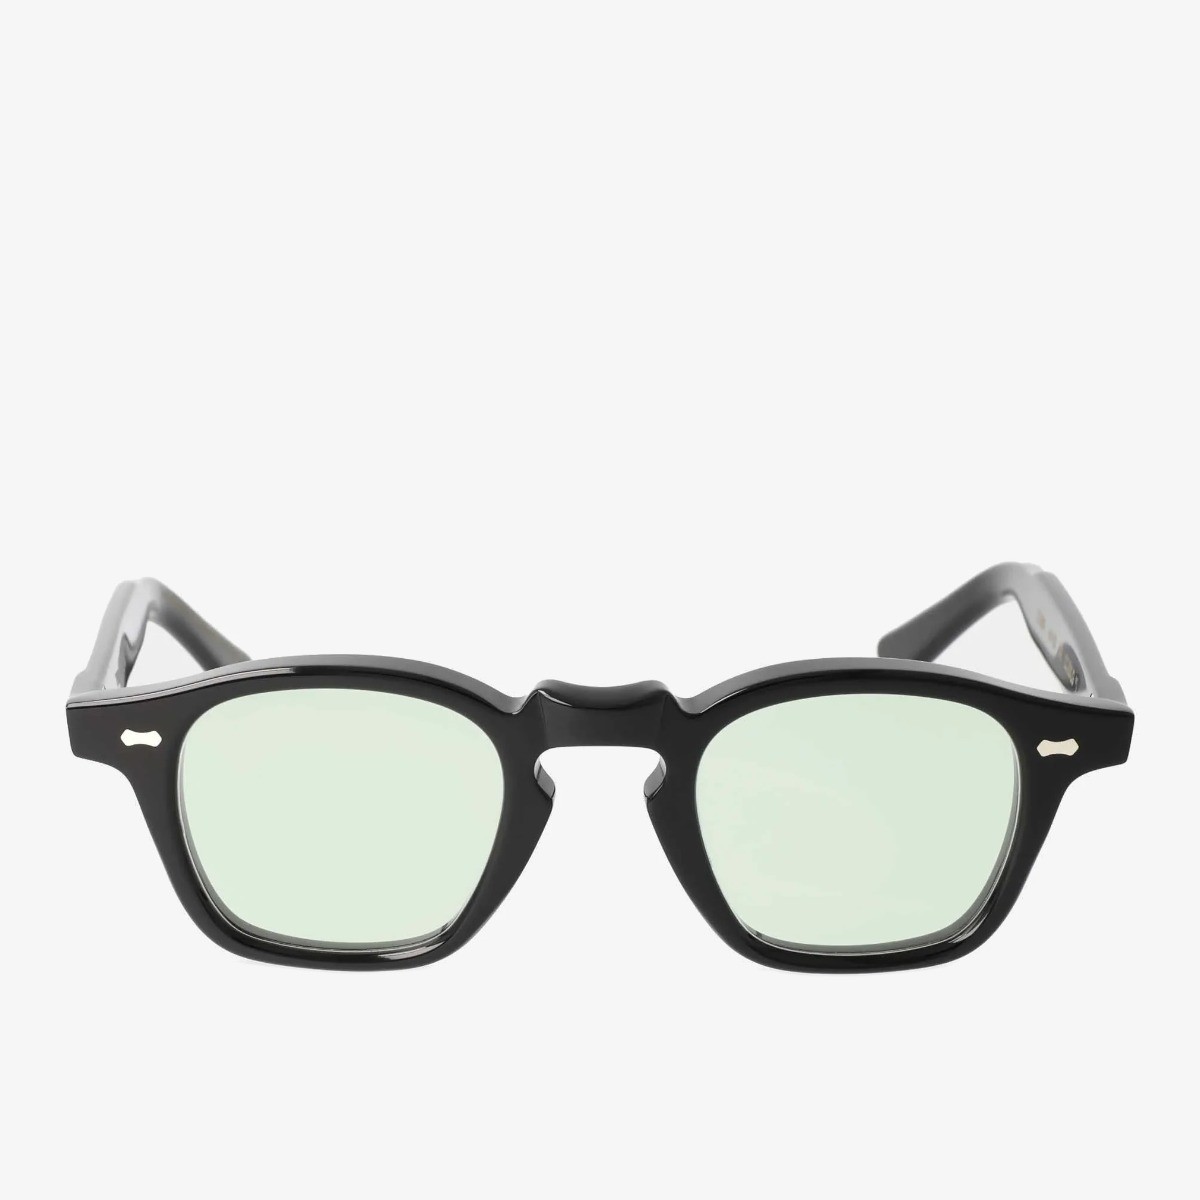 TBD Eyewear Cord black frame green lenses sunglasses